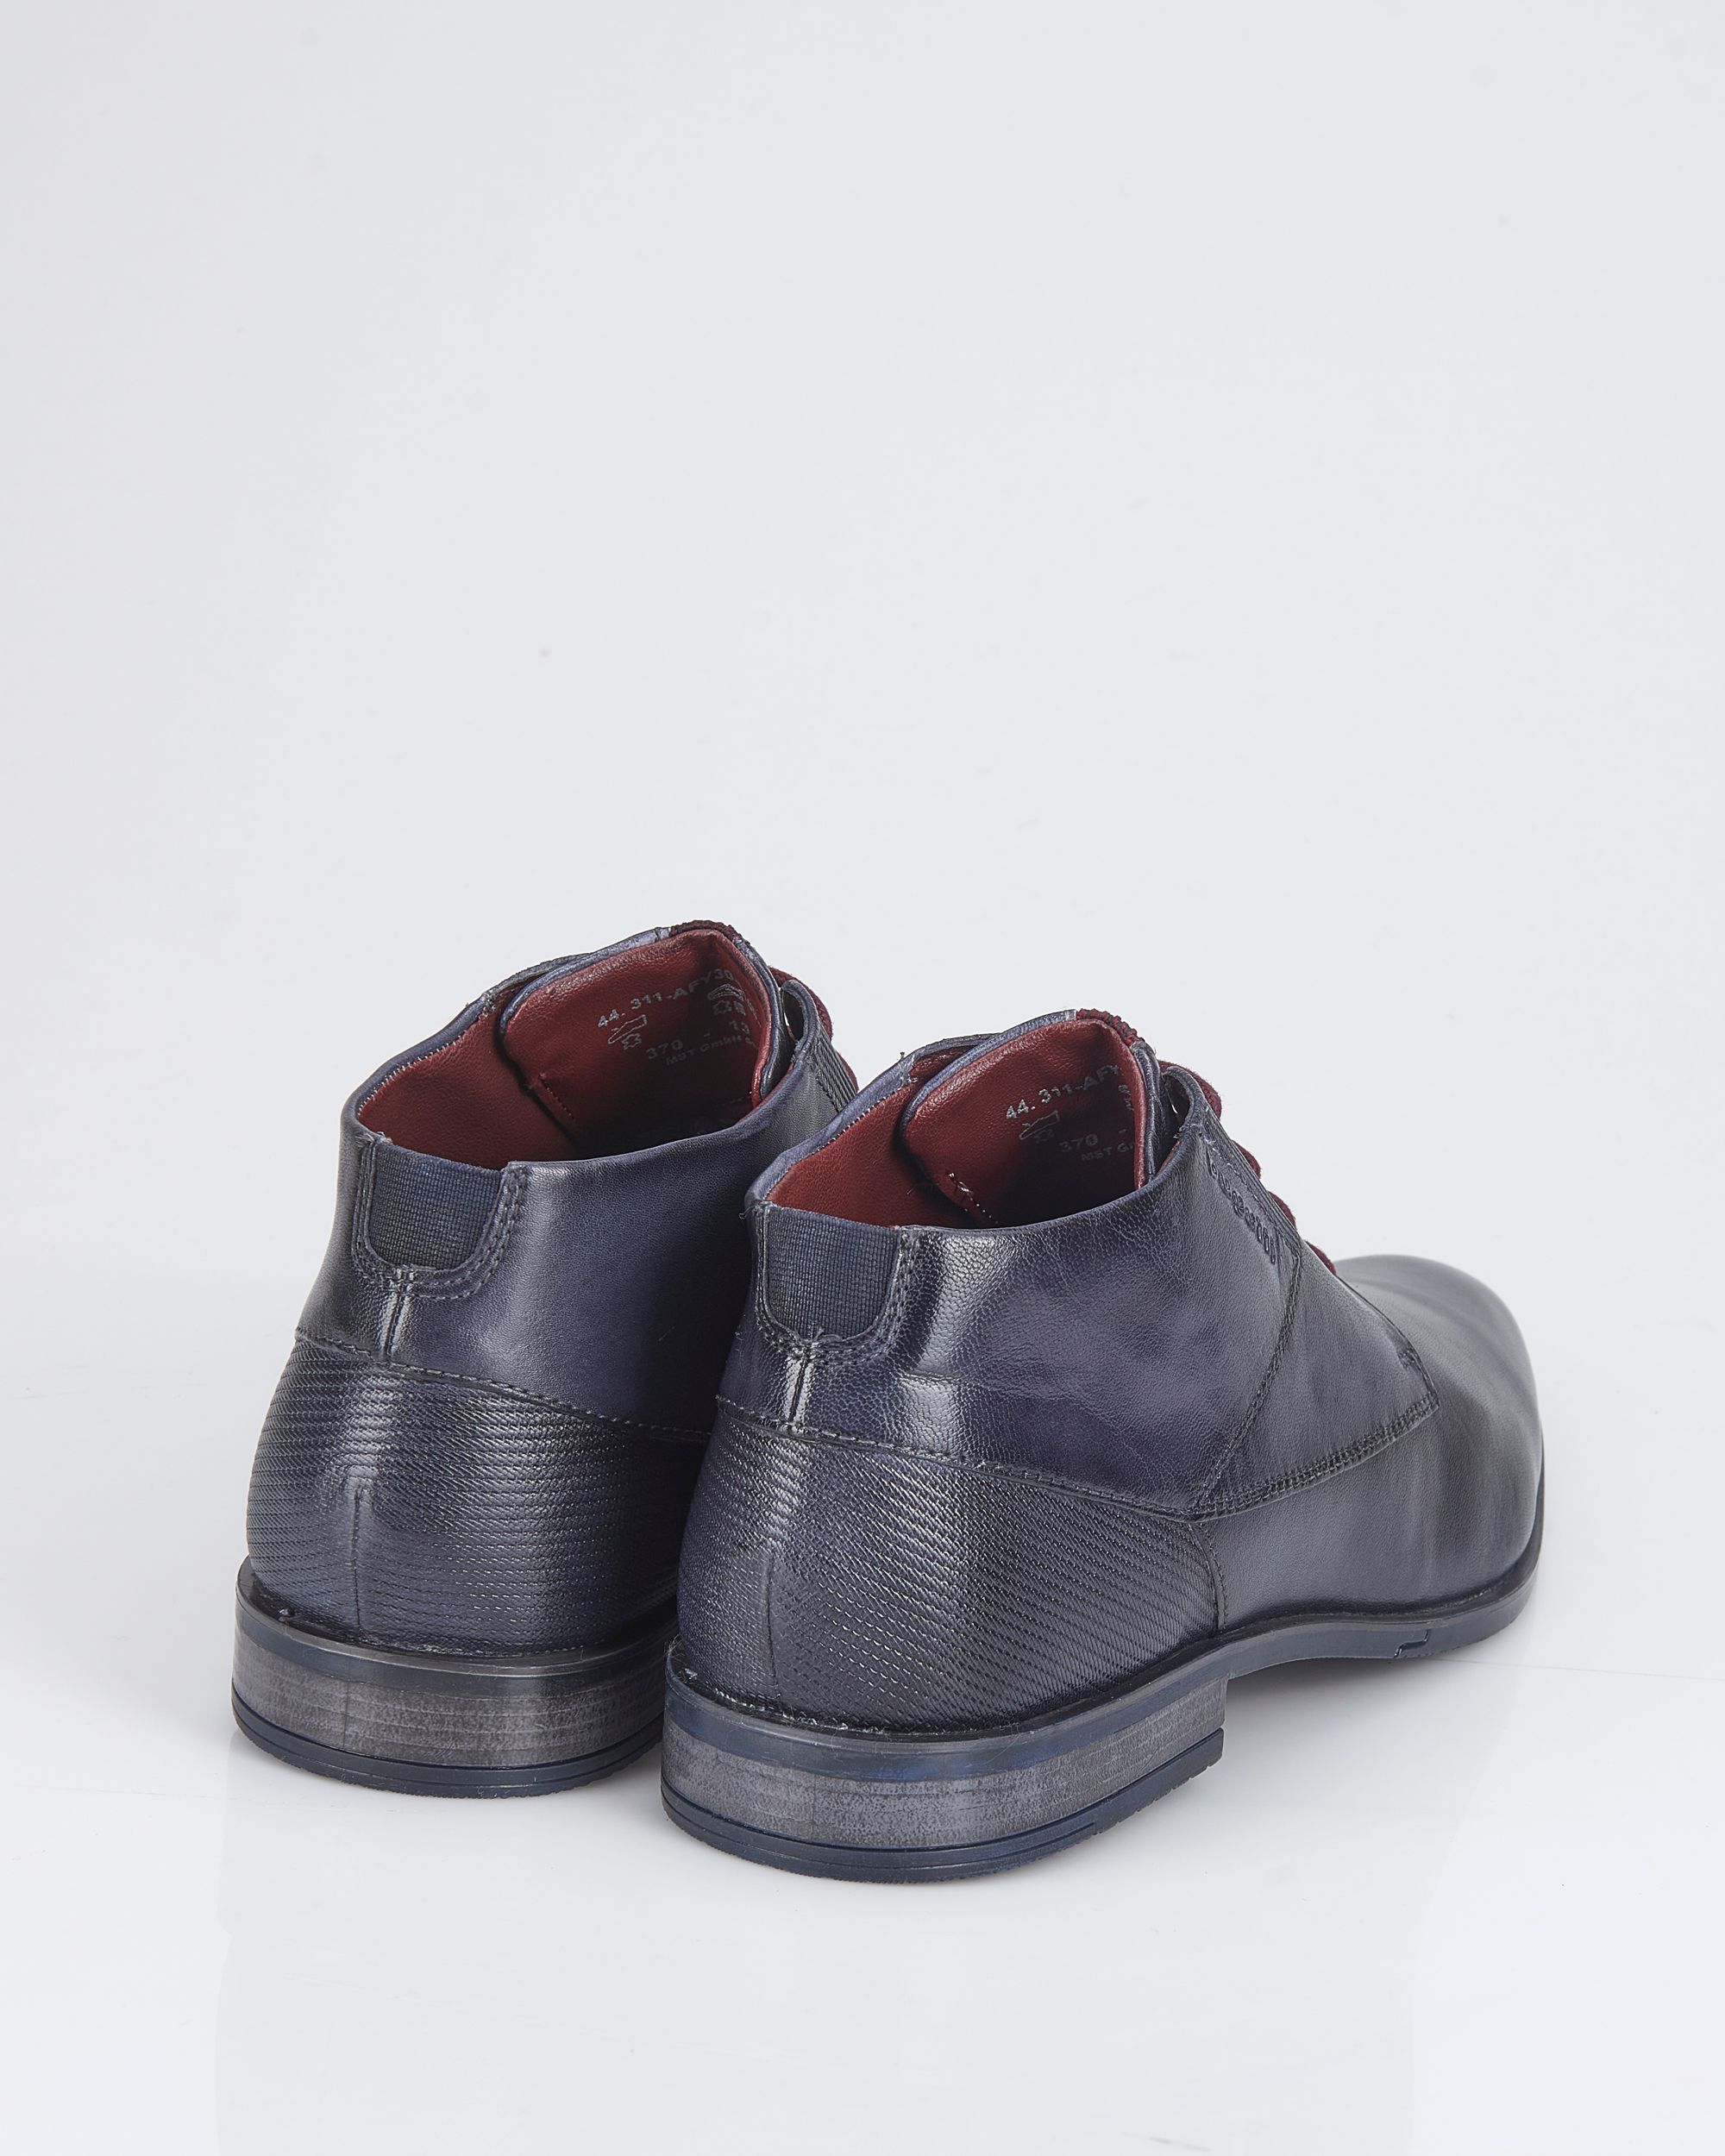 Bugatti Gapo Geklede schoenen Donker blauw 089040-001-41